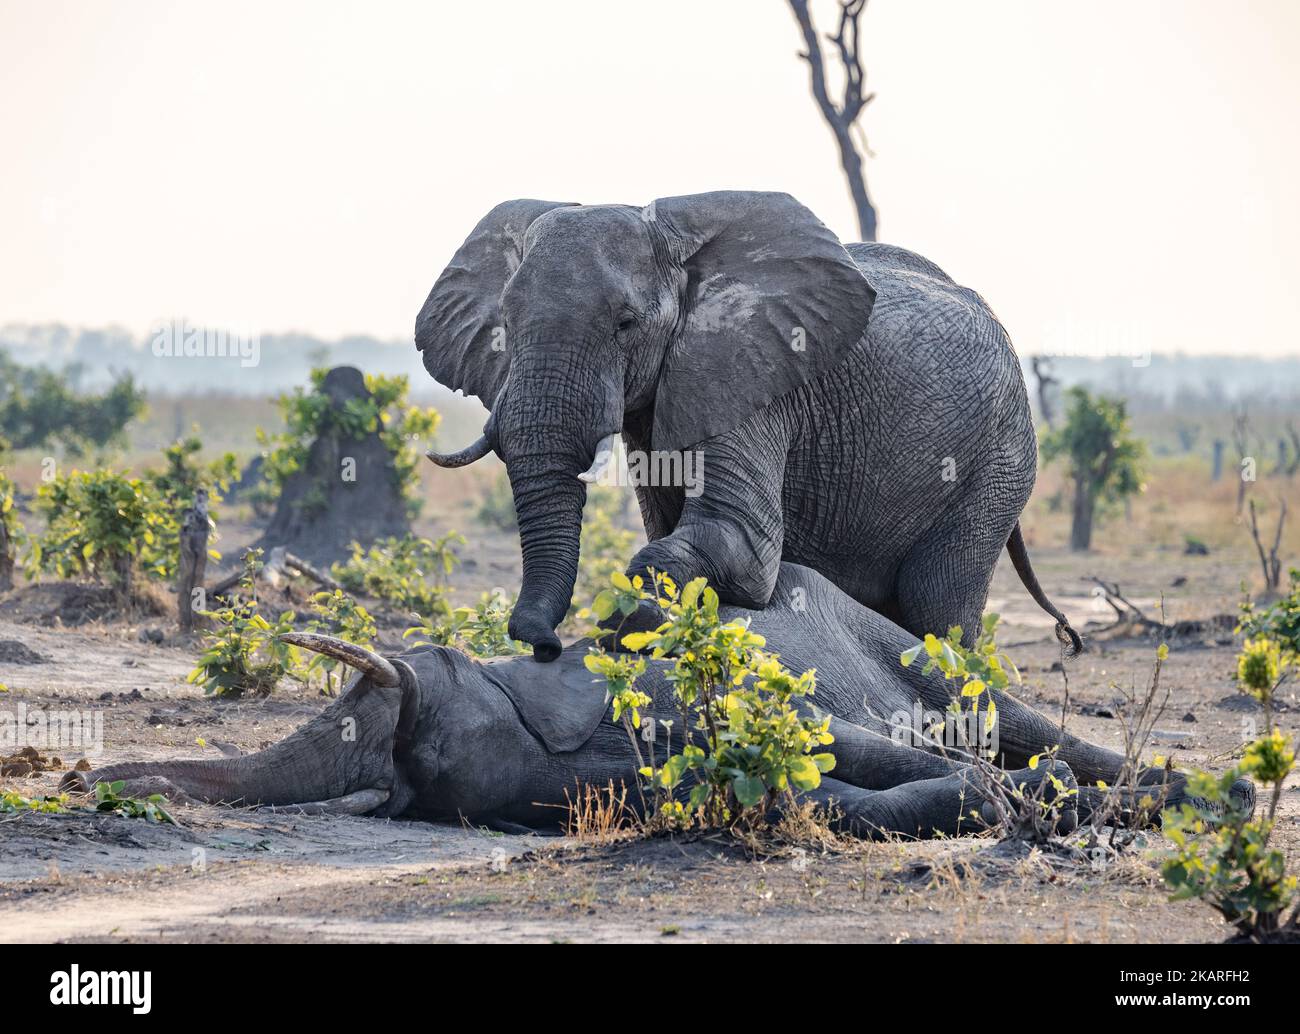 Toter Elefant, Loxodonta africana - ein erwachsener Elefant, der einen toten afrikanischen Elefanten trauert, Okavango Delta Botswana Africa. Das Verhalten der Tiere Stockfoto